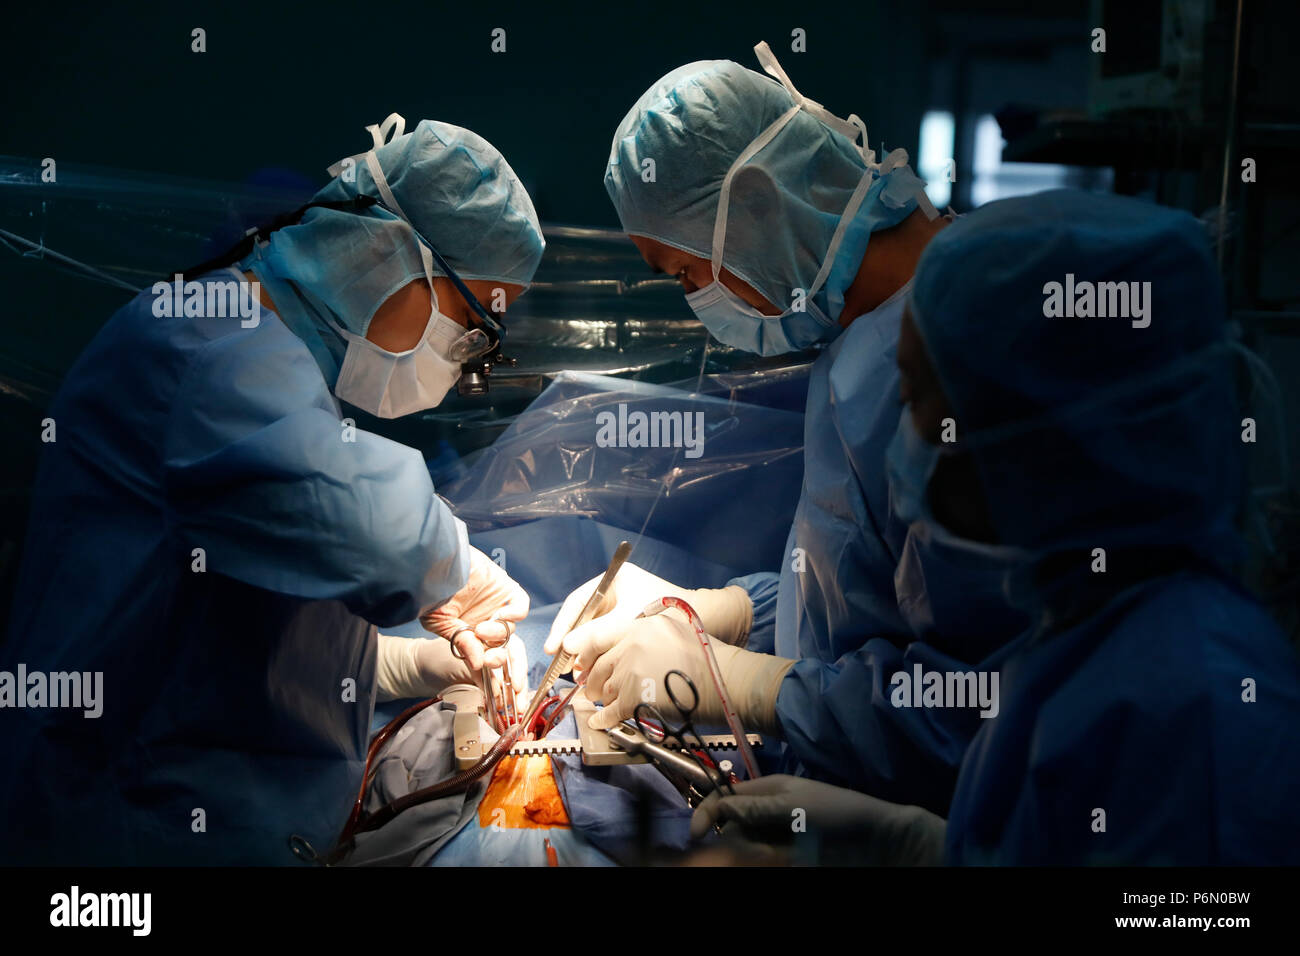 Tam Duc Kardiologie Krankenhaus. Op. Der herzchirurgie. Ho Chi Minh City. Vietnam. Stockfoto